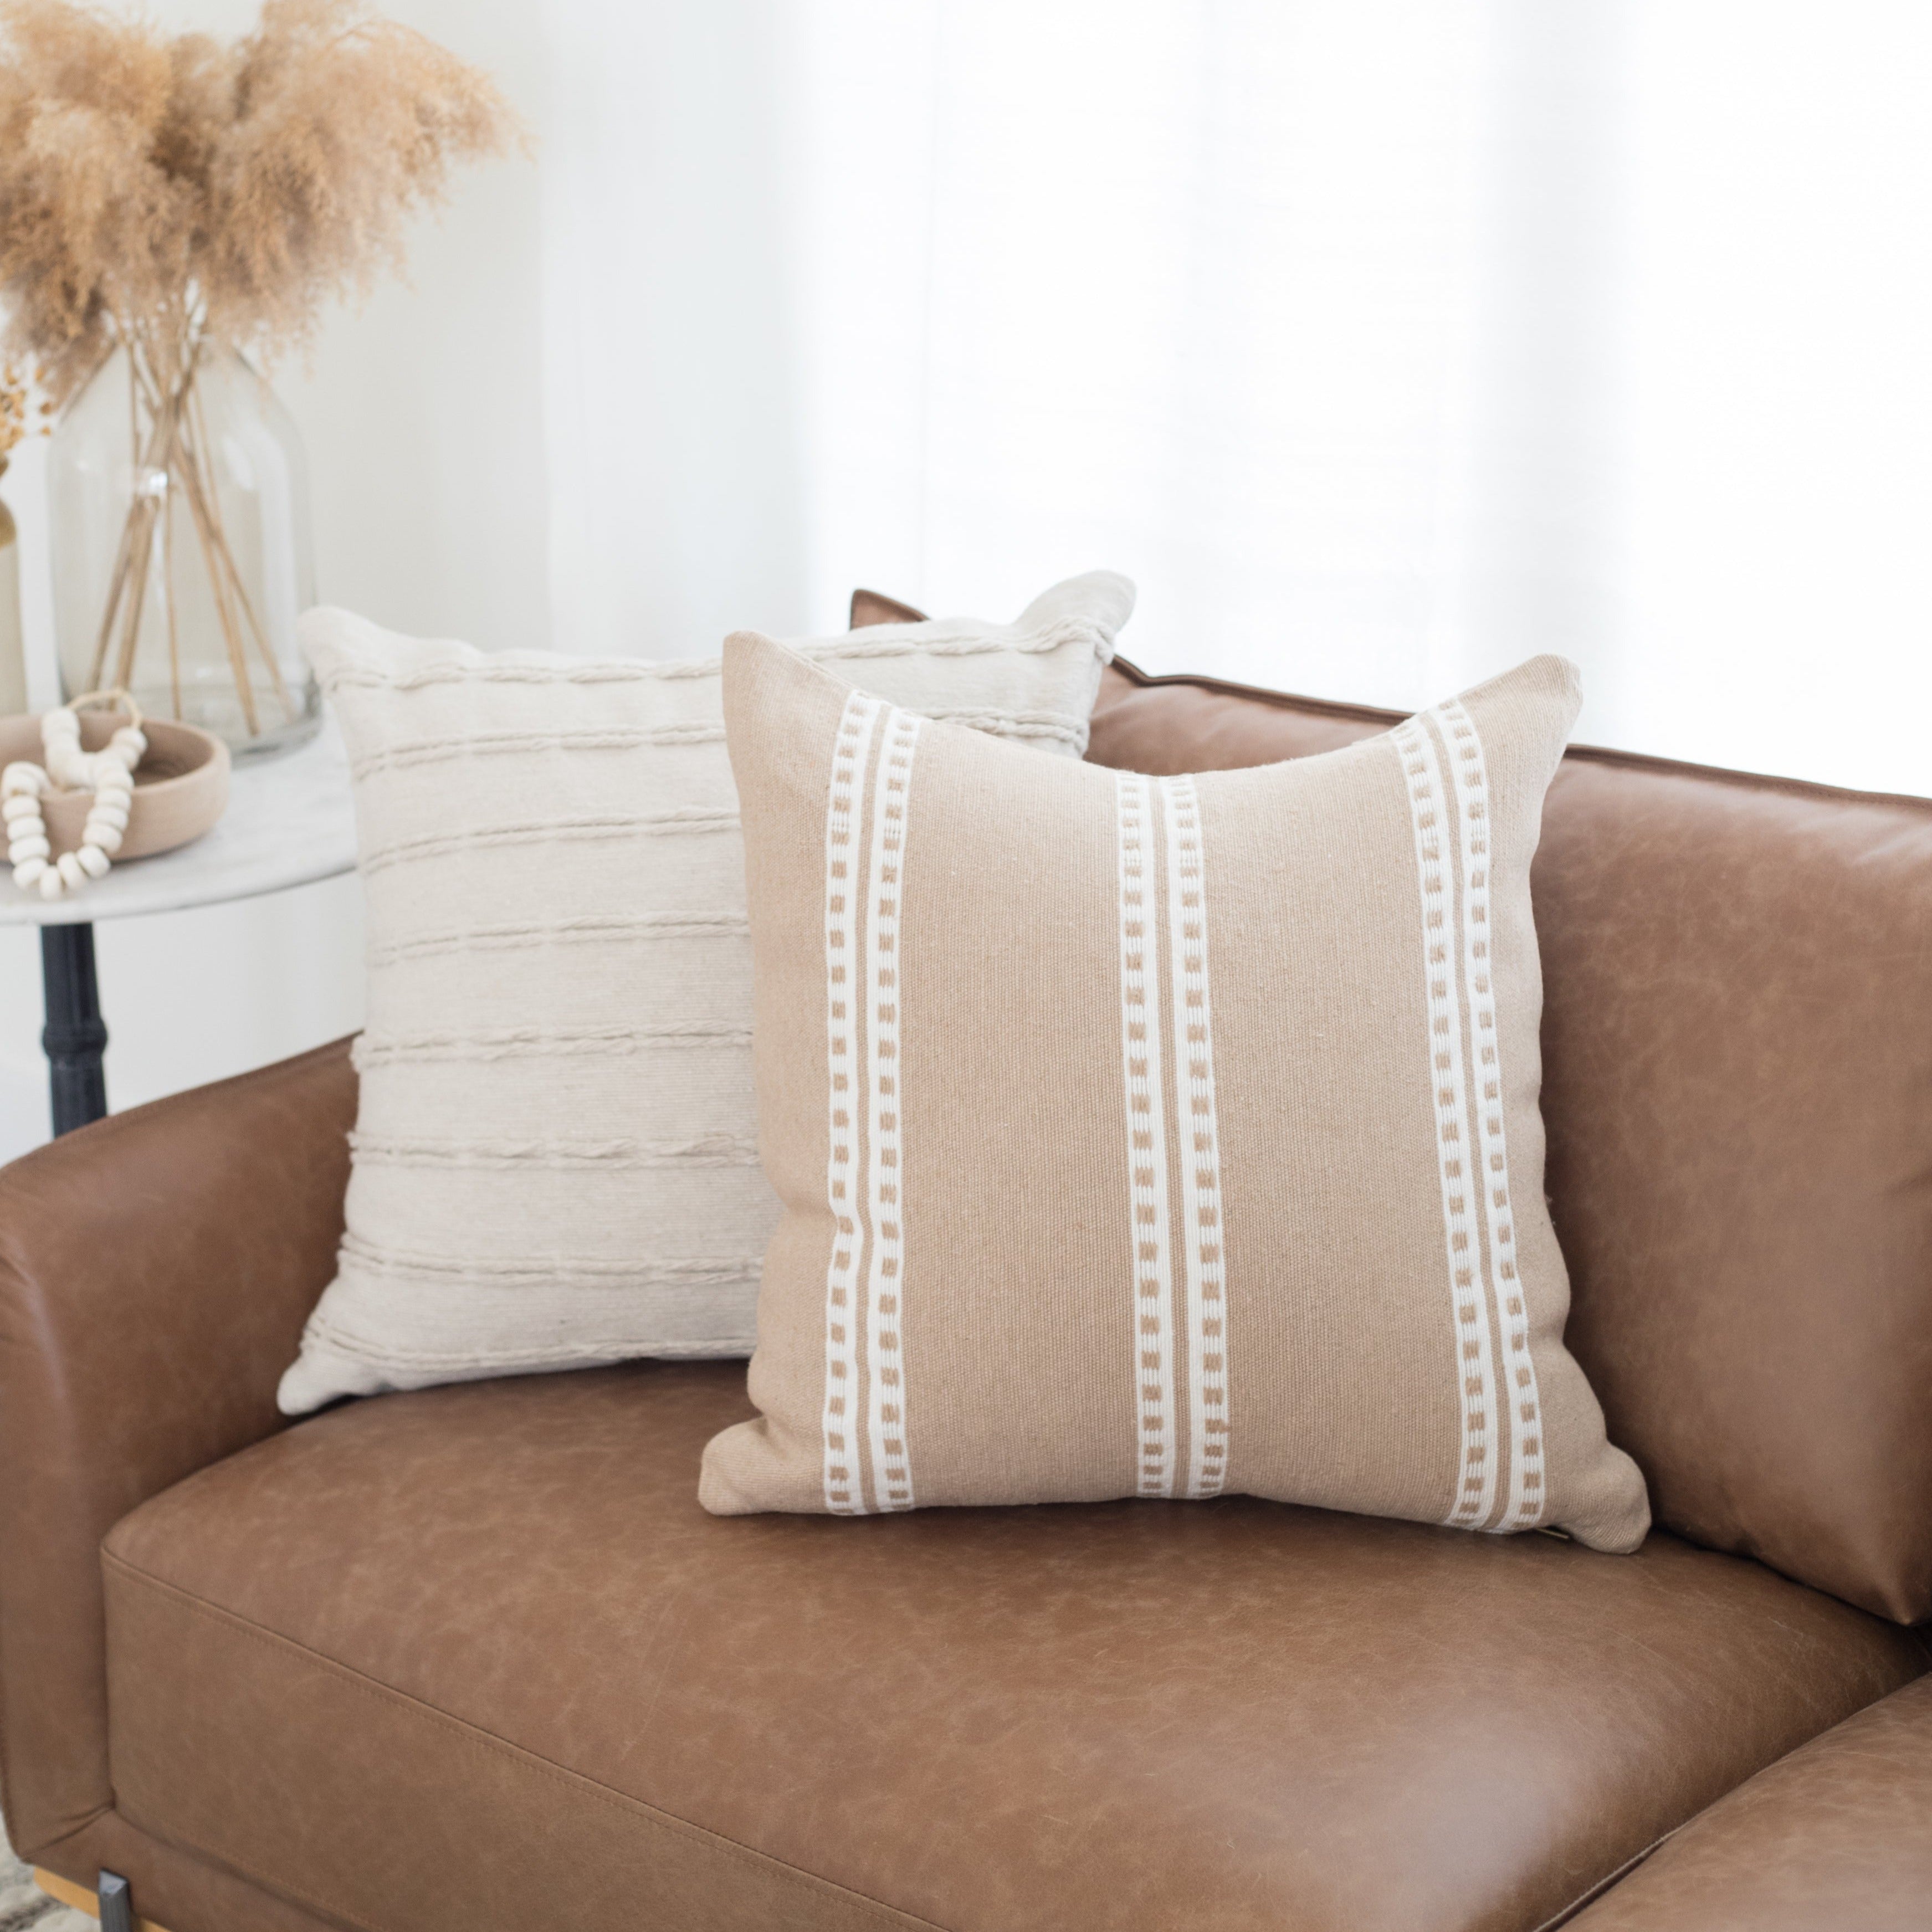 Nehimba Safari Collection: Sage Green & White Decorative Pillow Covers